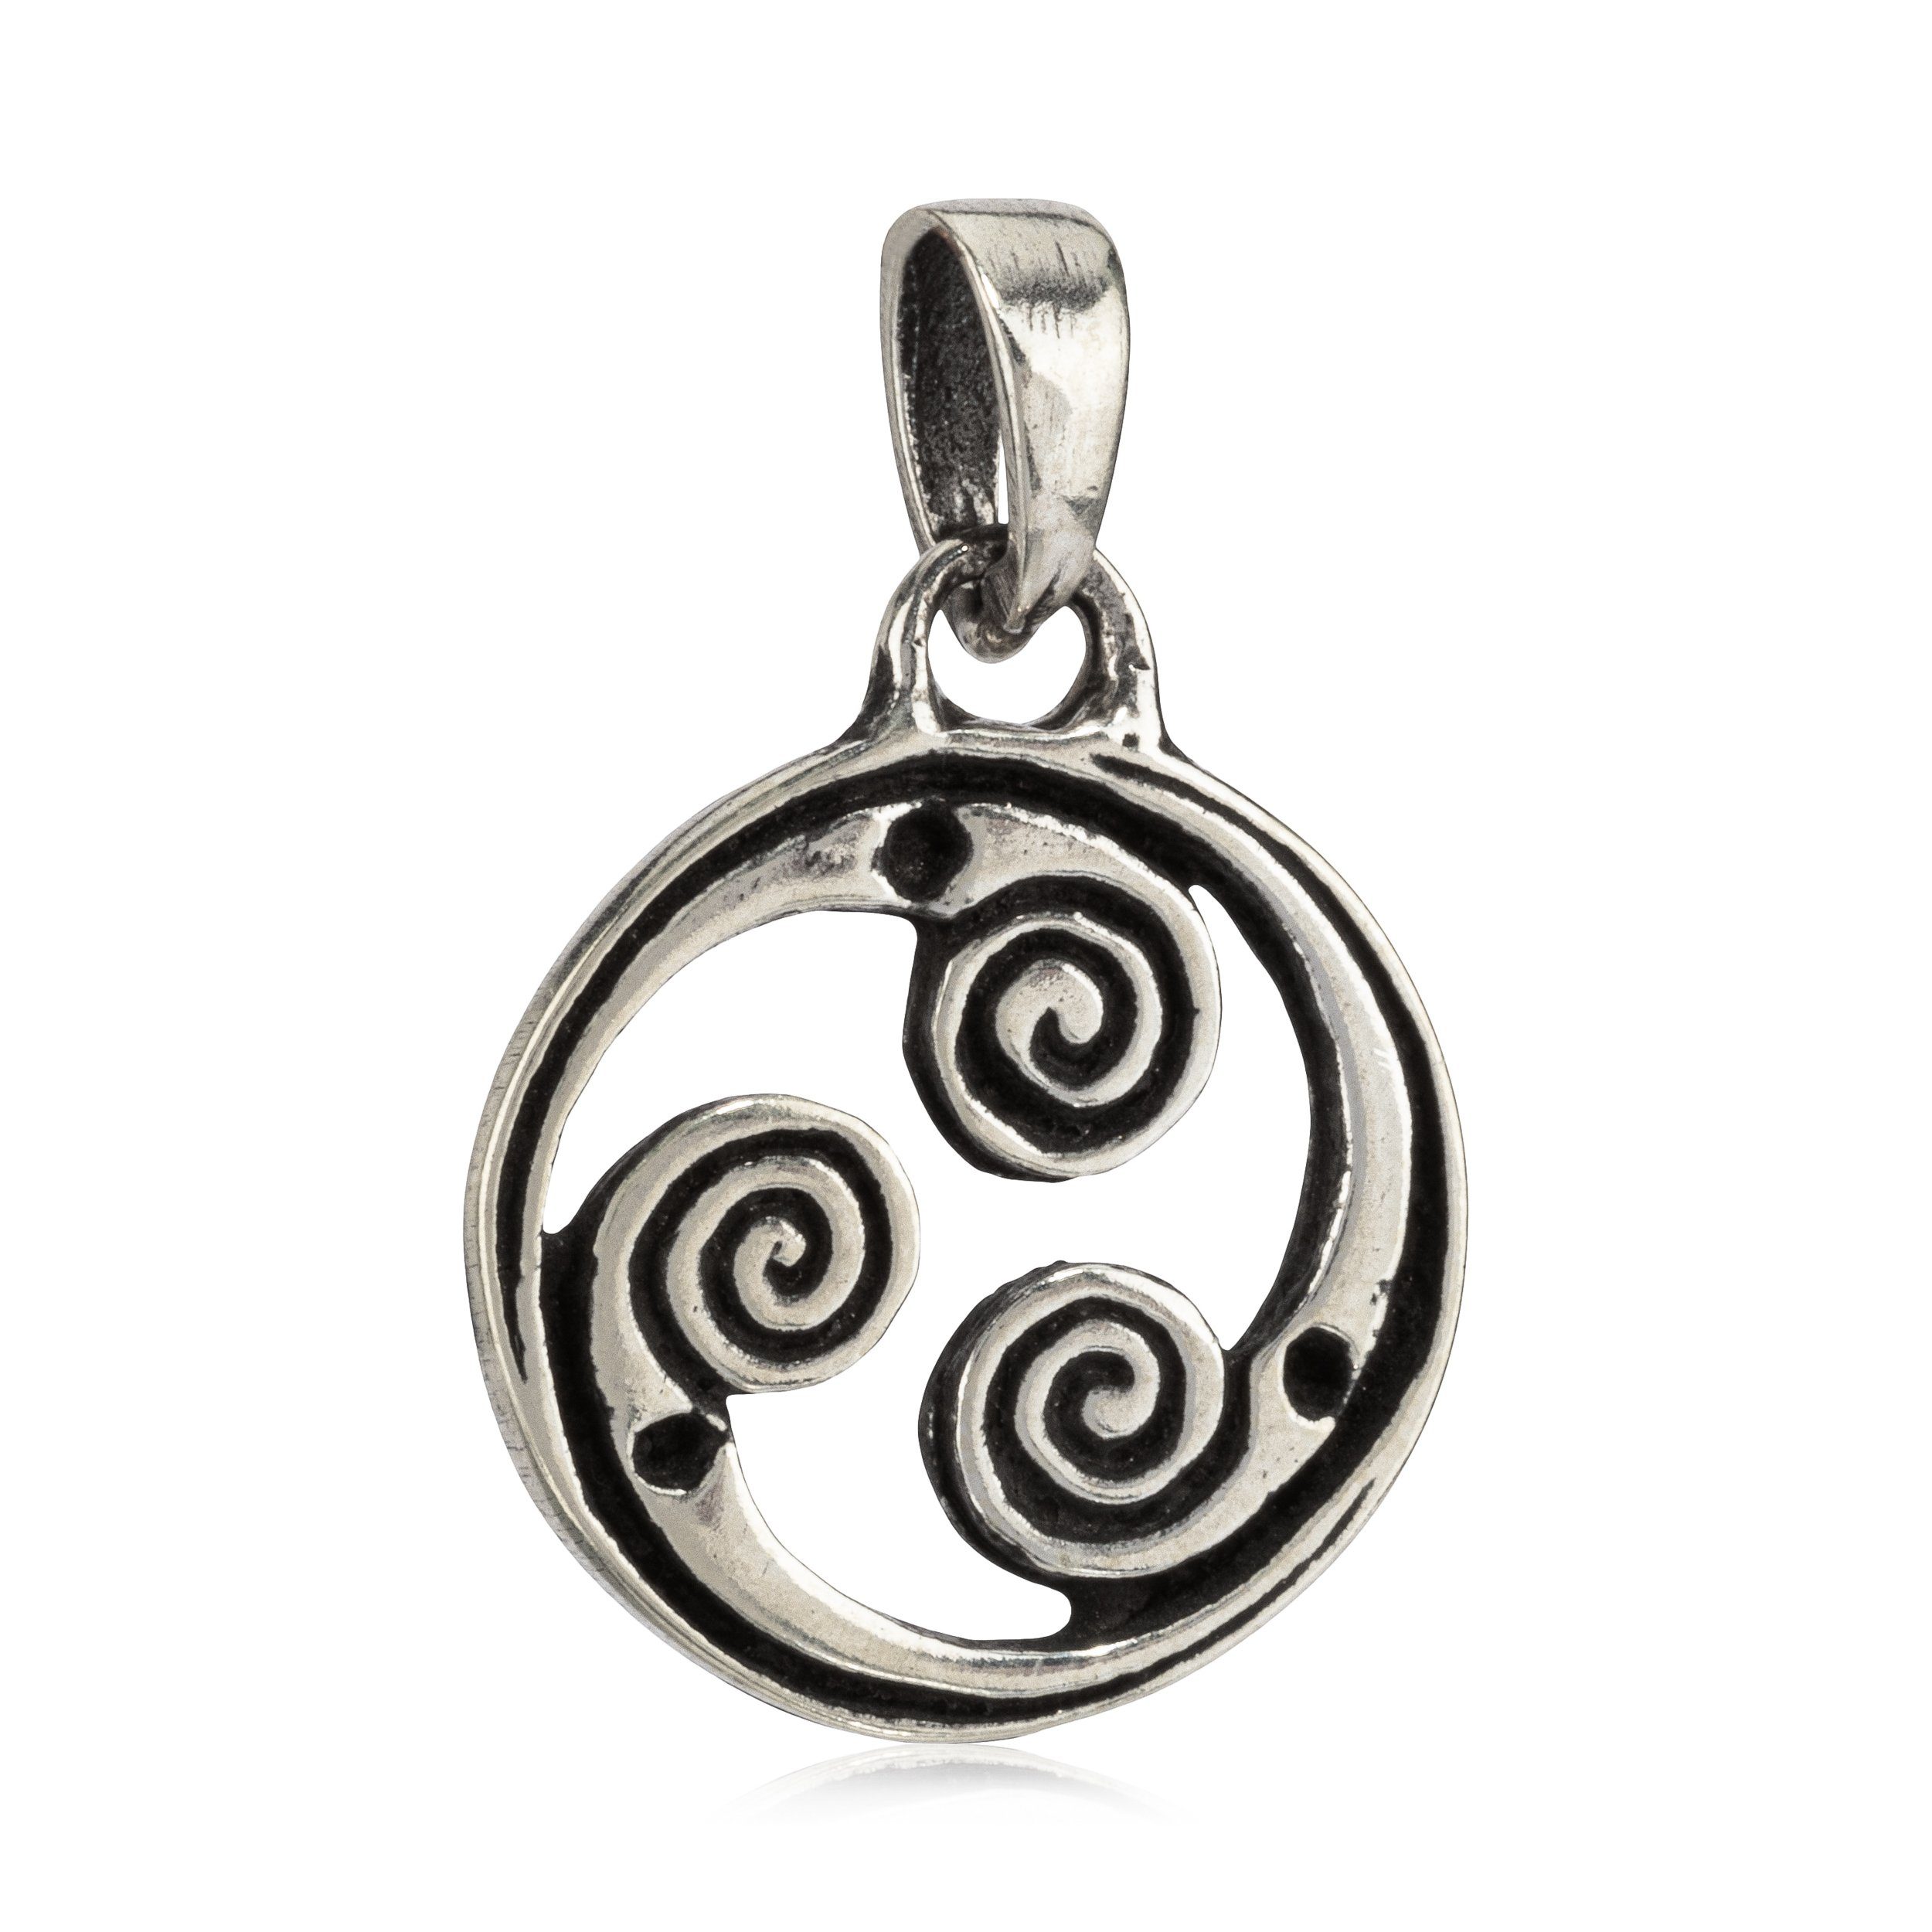 NKlaus Kettenanhänger Keltisches Spiralrad Amulett 1,5cm Silber 925 Ket, 925 Sterling Silber Silberschmuck für Damen | Kettenanhänger